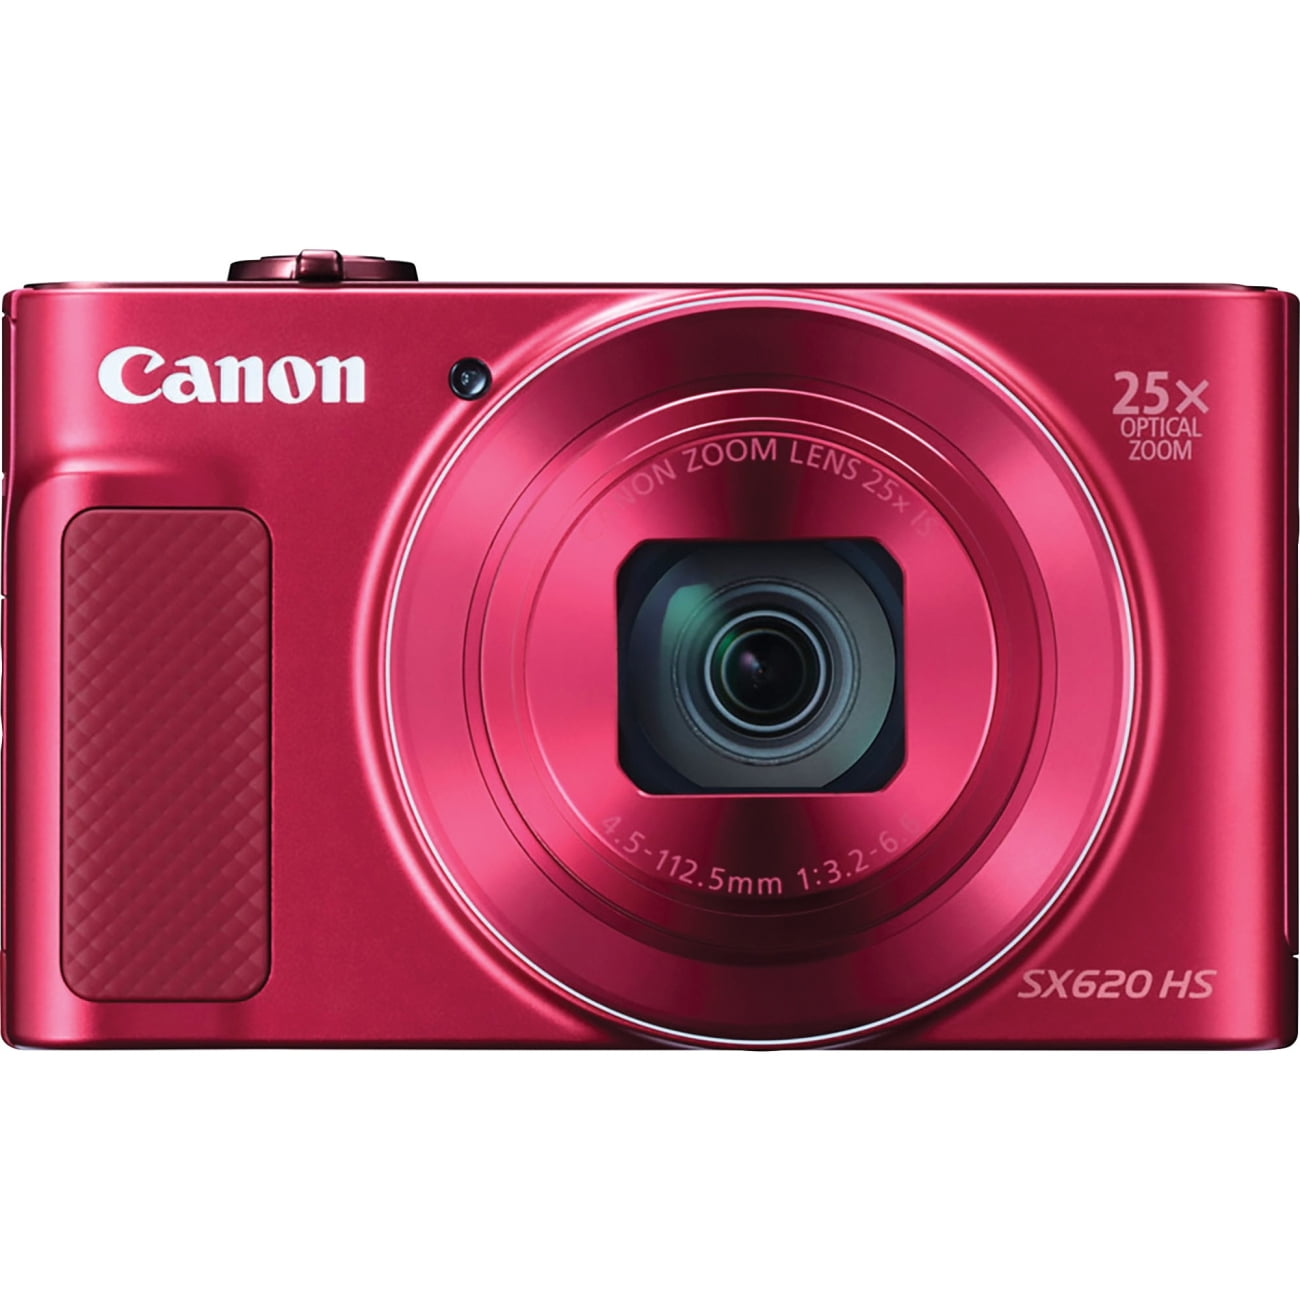 Canon SX620 HS Digital (Red) - Walmart.com